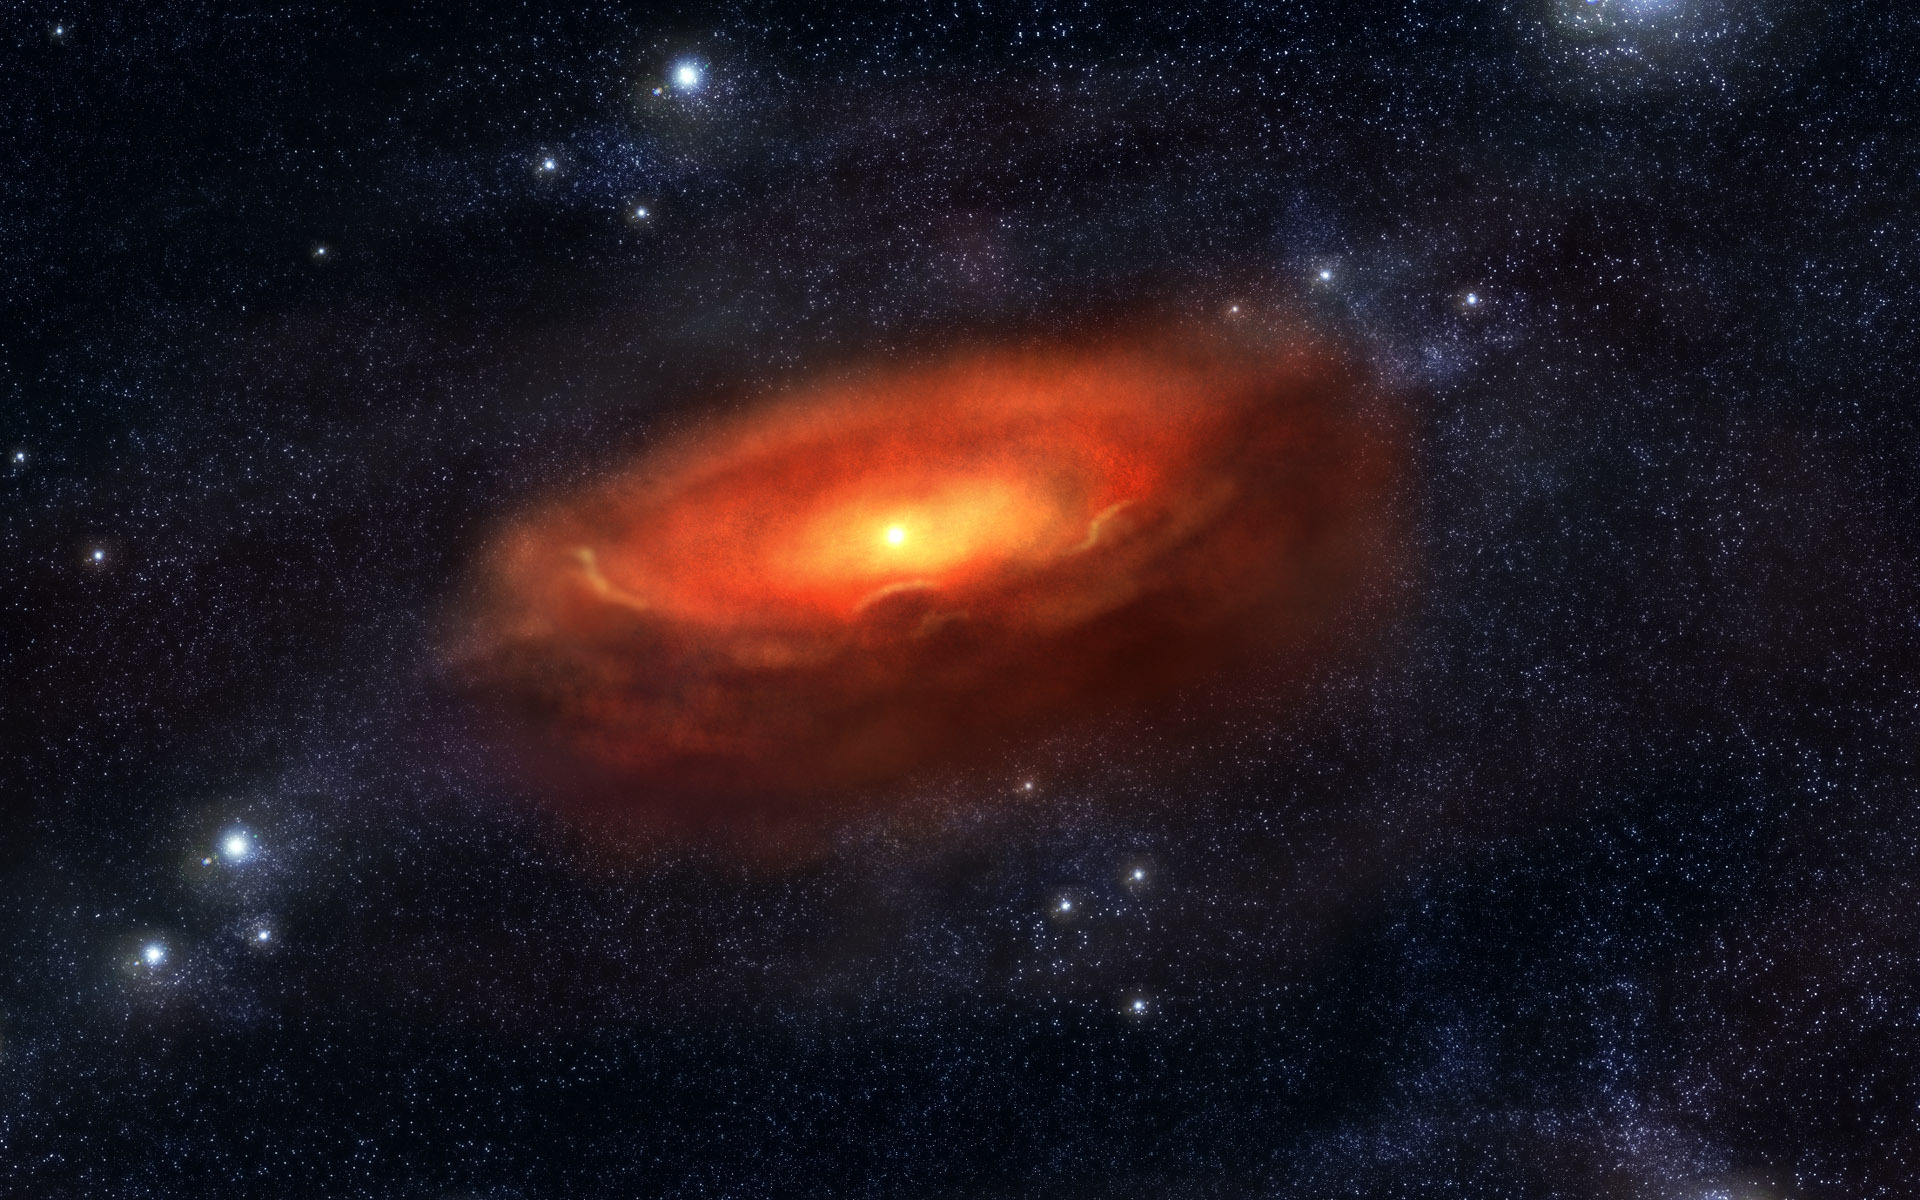 Sci-fi desktop wallpaper featuring a breathtaking galaxy.